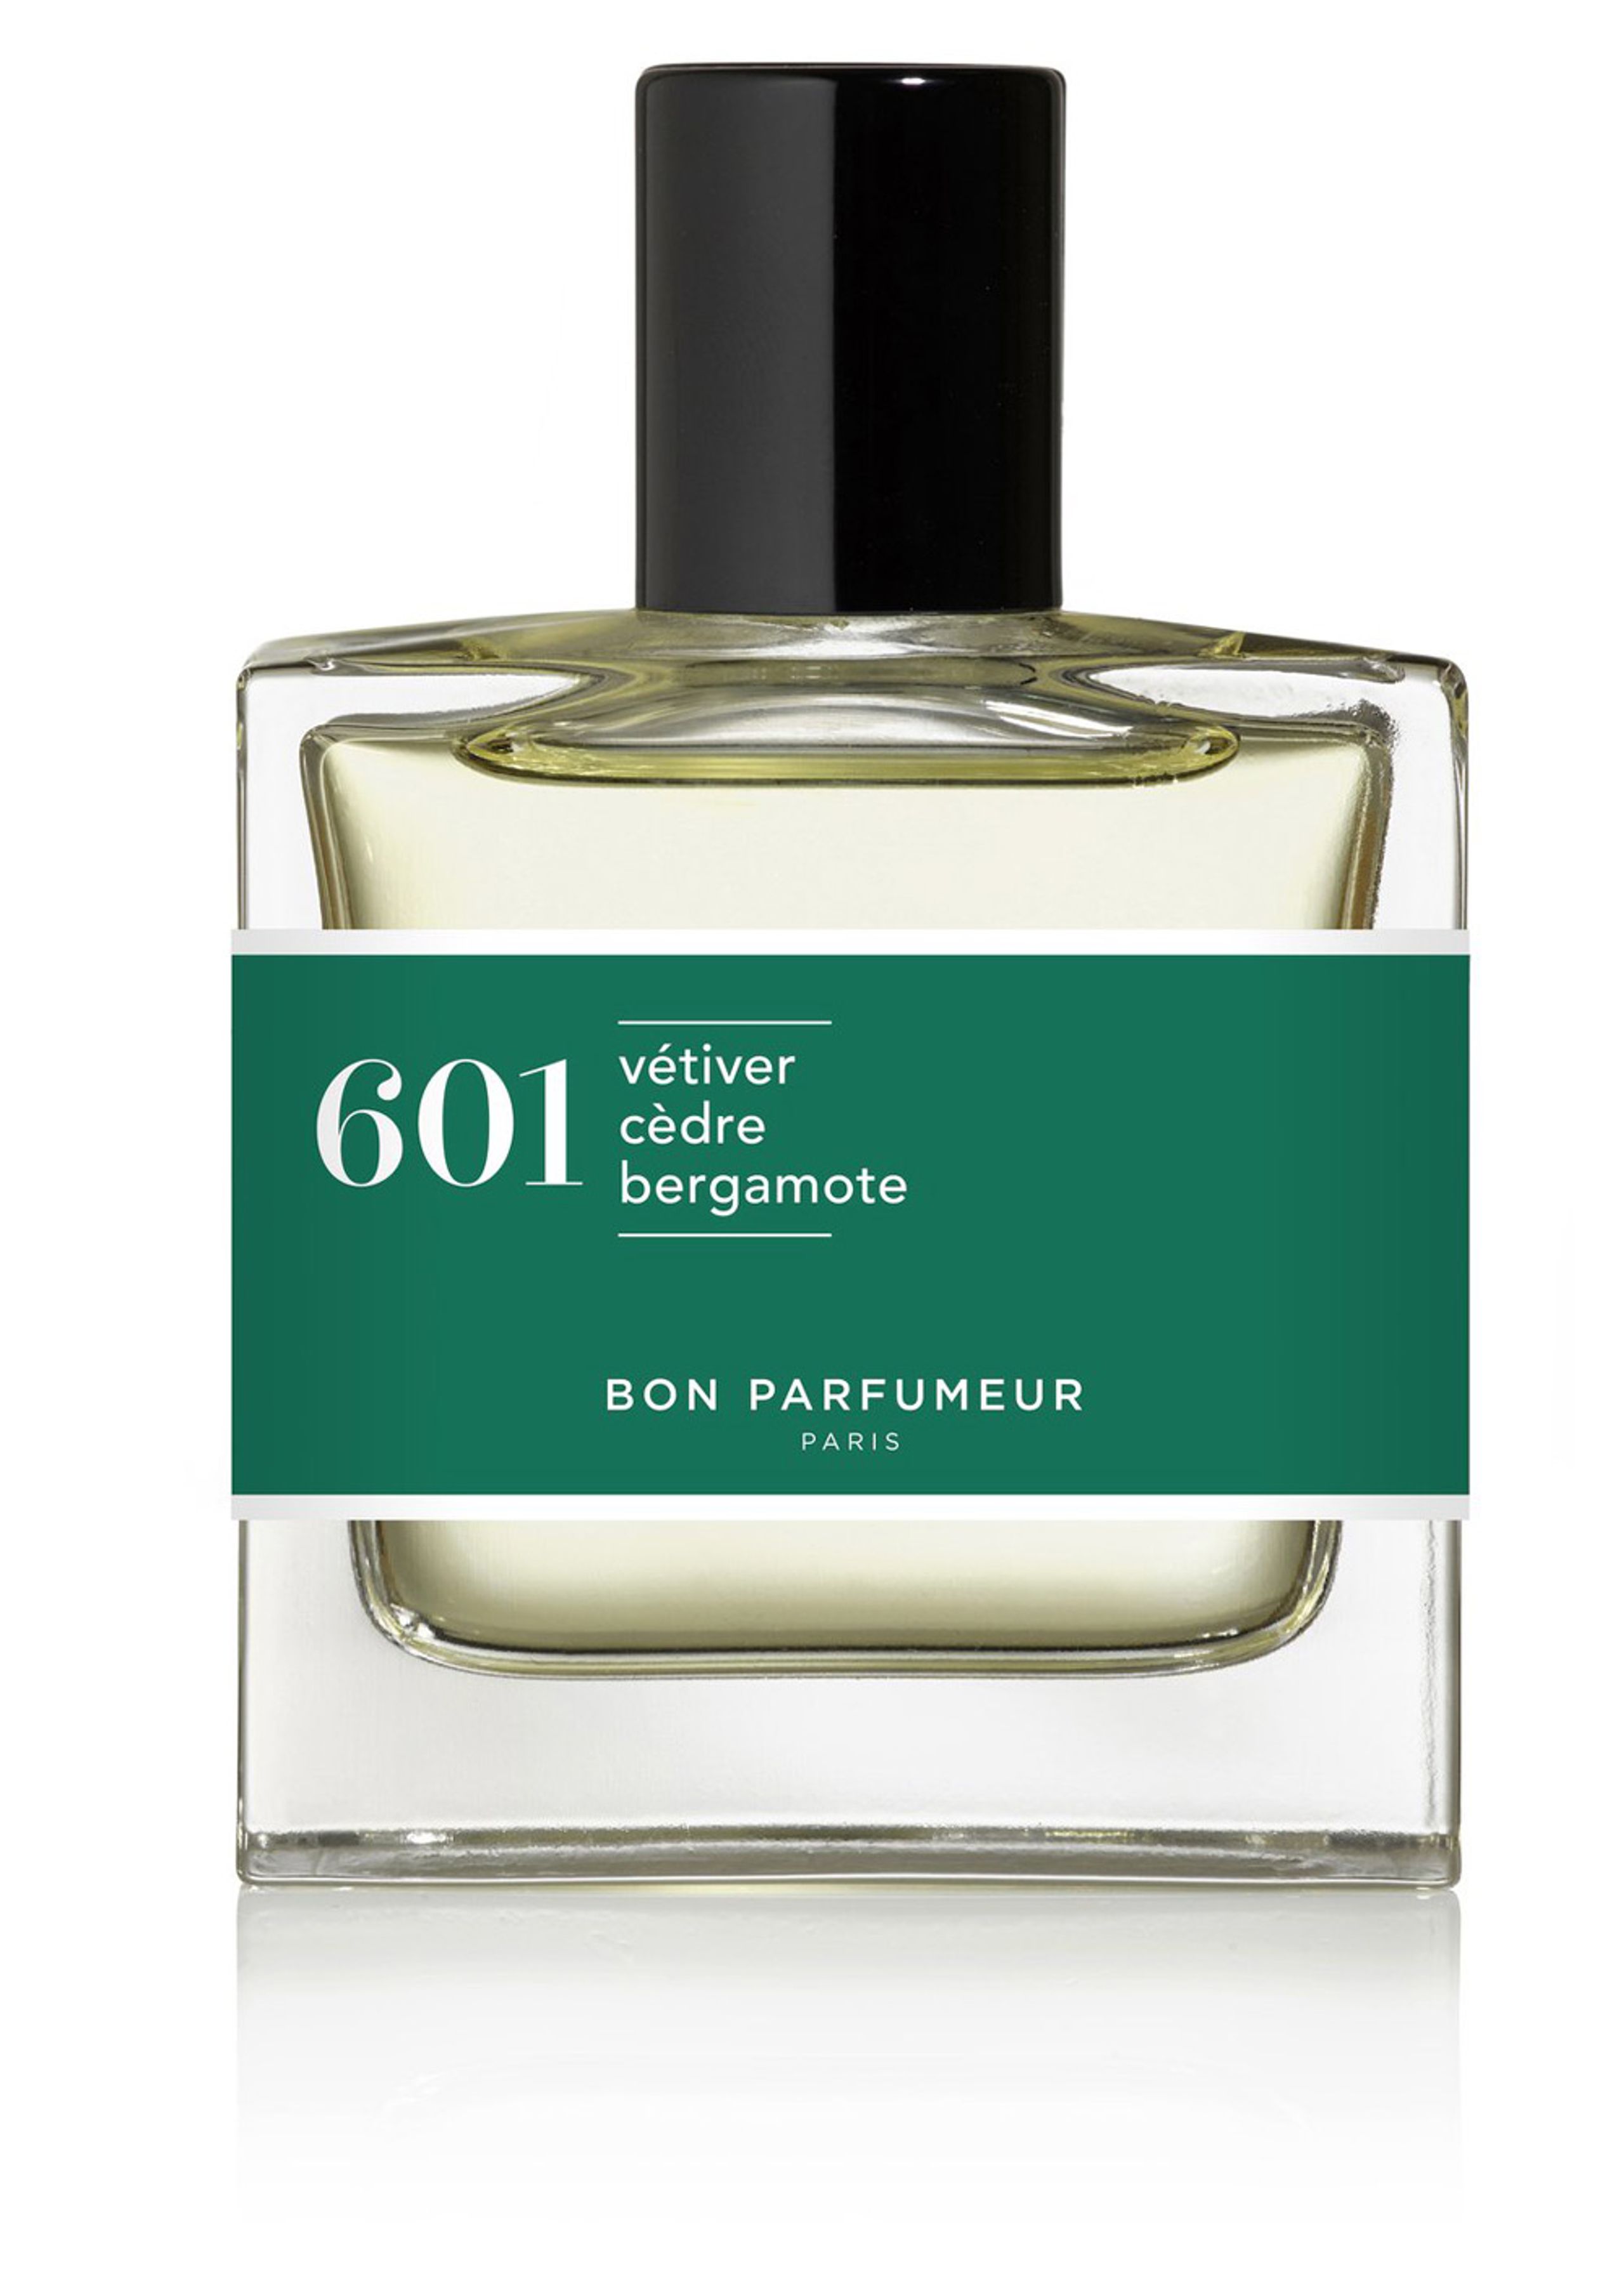 Bon Parfumeur - Parfume - Eau De Parfum - #601: vetiver / cedar / bergamot